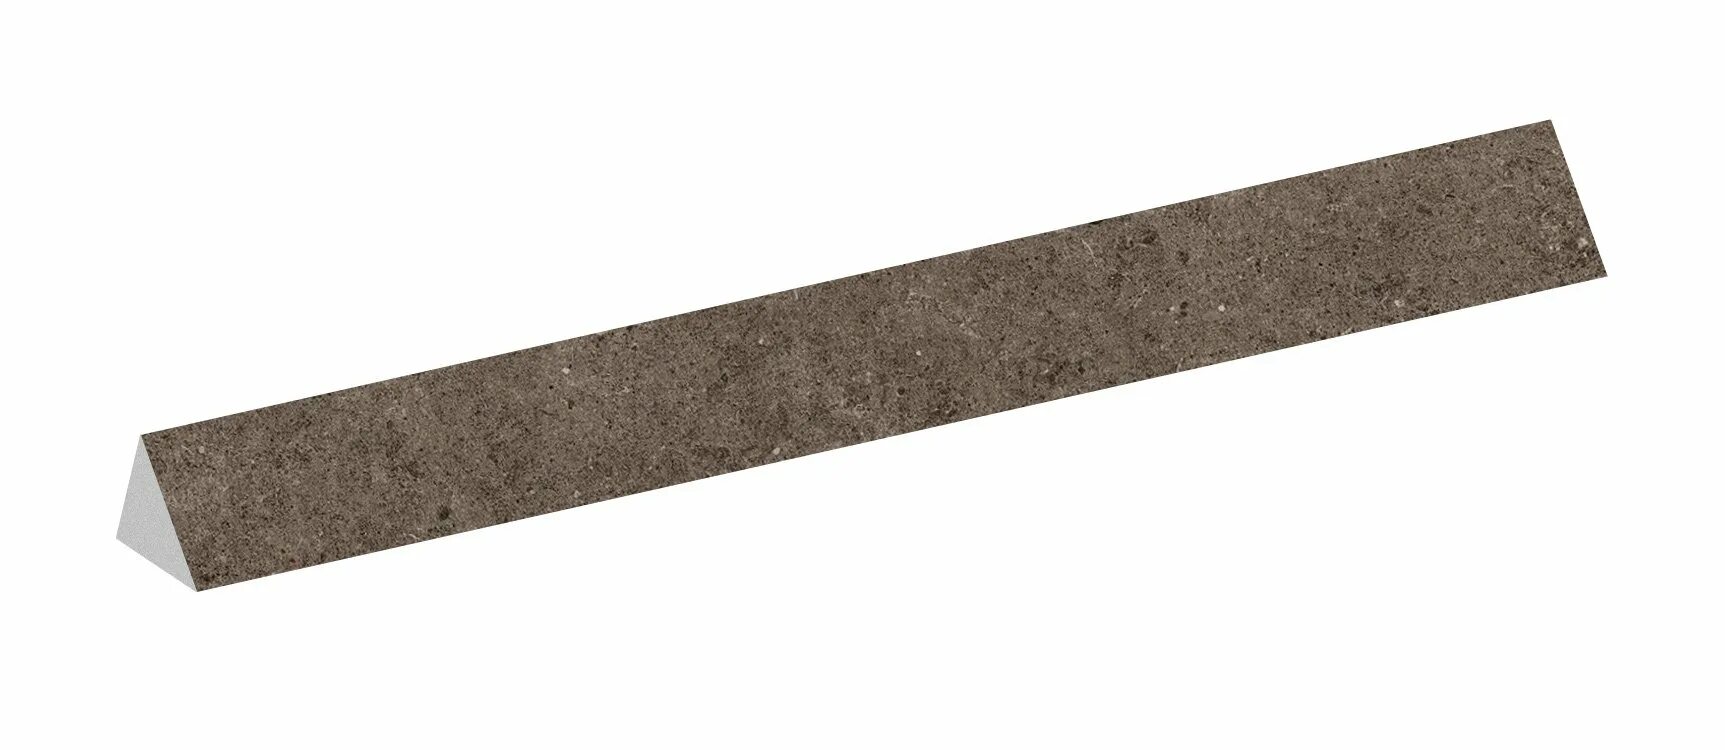 Boost stone. Boost Stone Tobacco 120x120 интерьер. Boost Stone griglia. Boost Stone Pearl 120x120 (a6qx) 120х120 Неглазурованный керамогранит. Boost Stone Smoke.